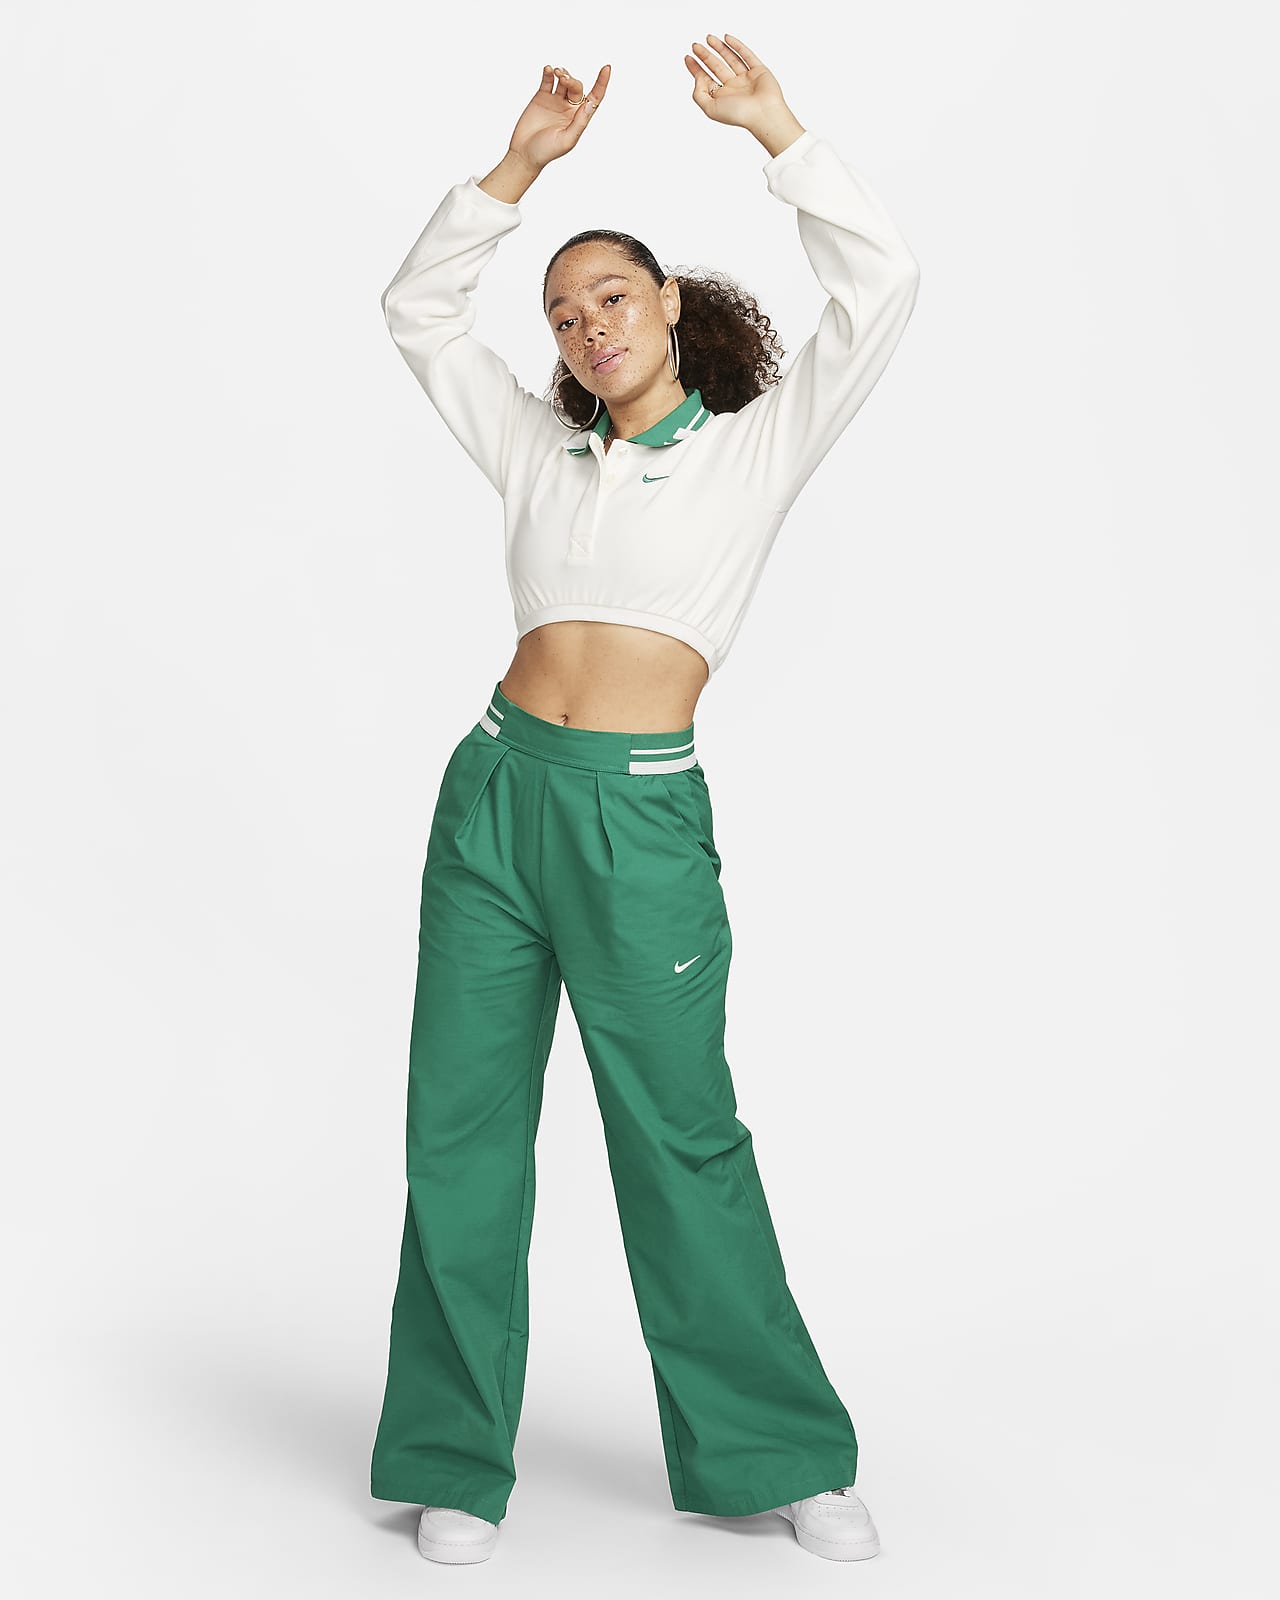 Nike Sportswear Collection Women\'s Cropped Polo. Long-Sleeve